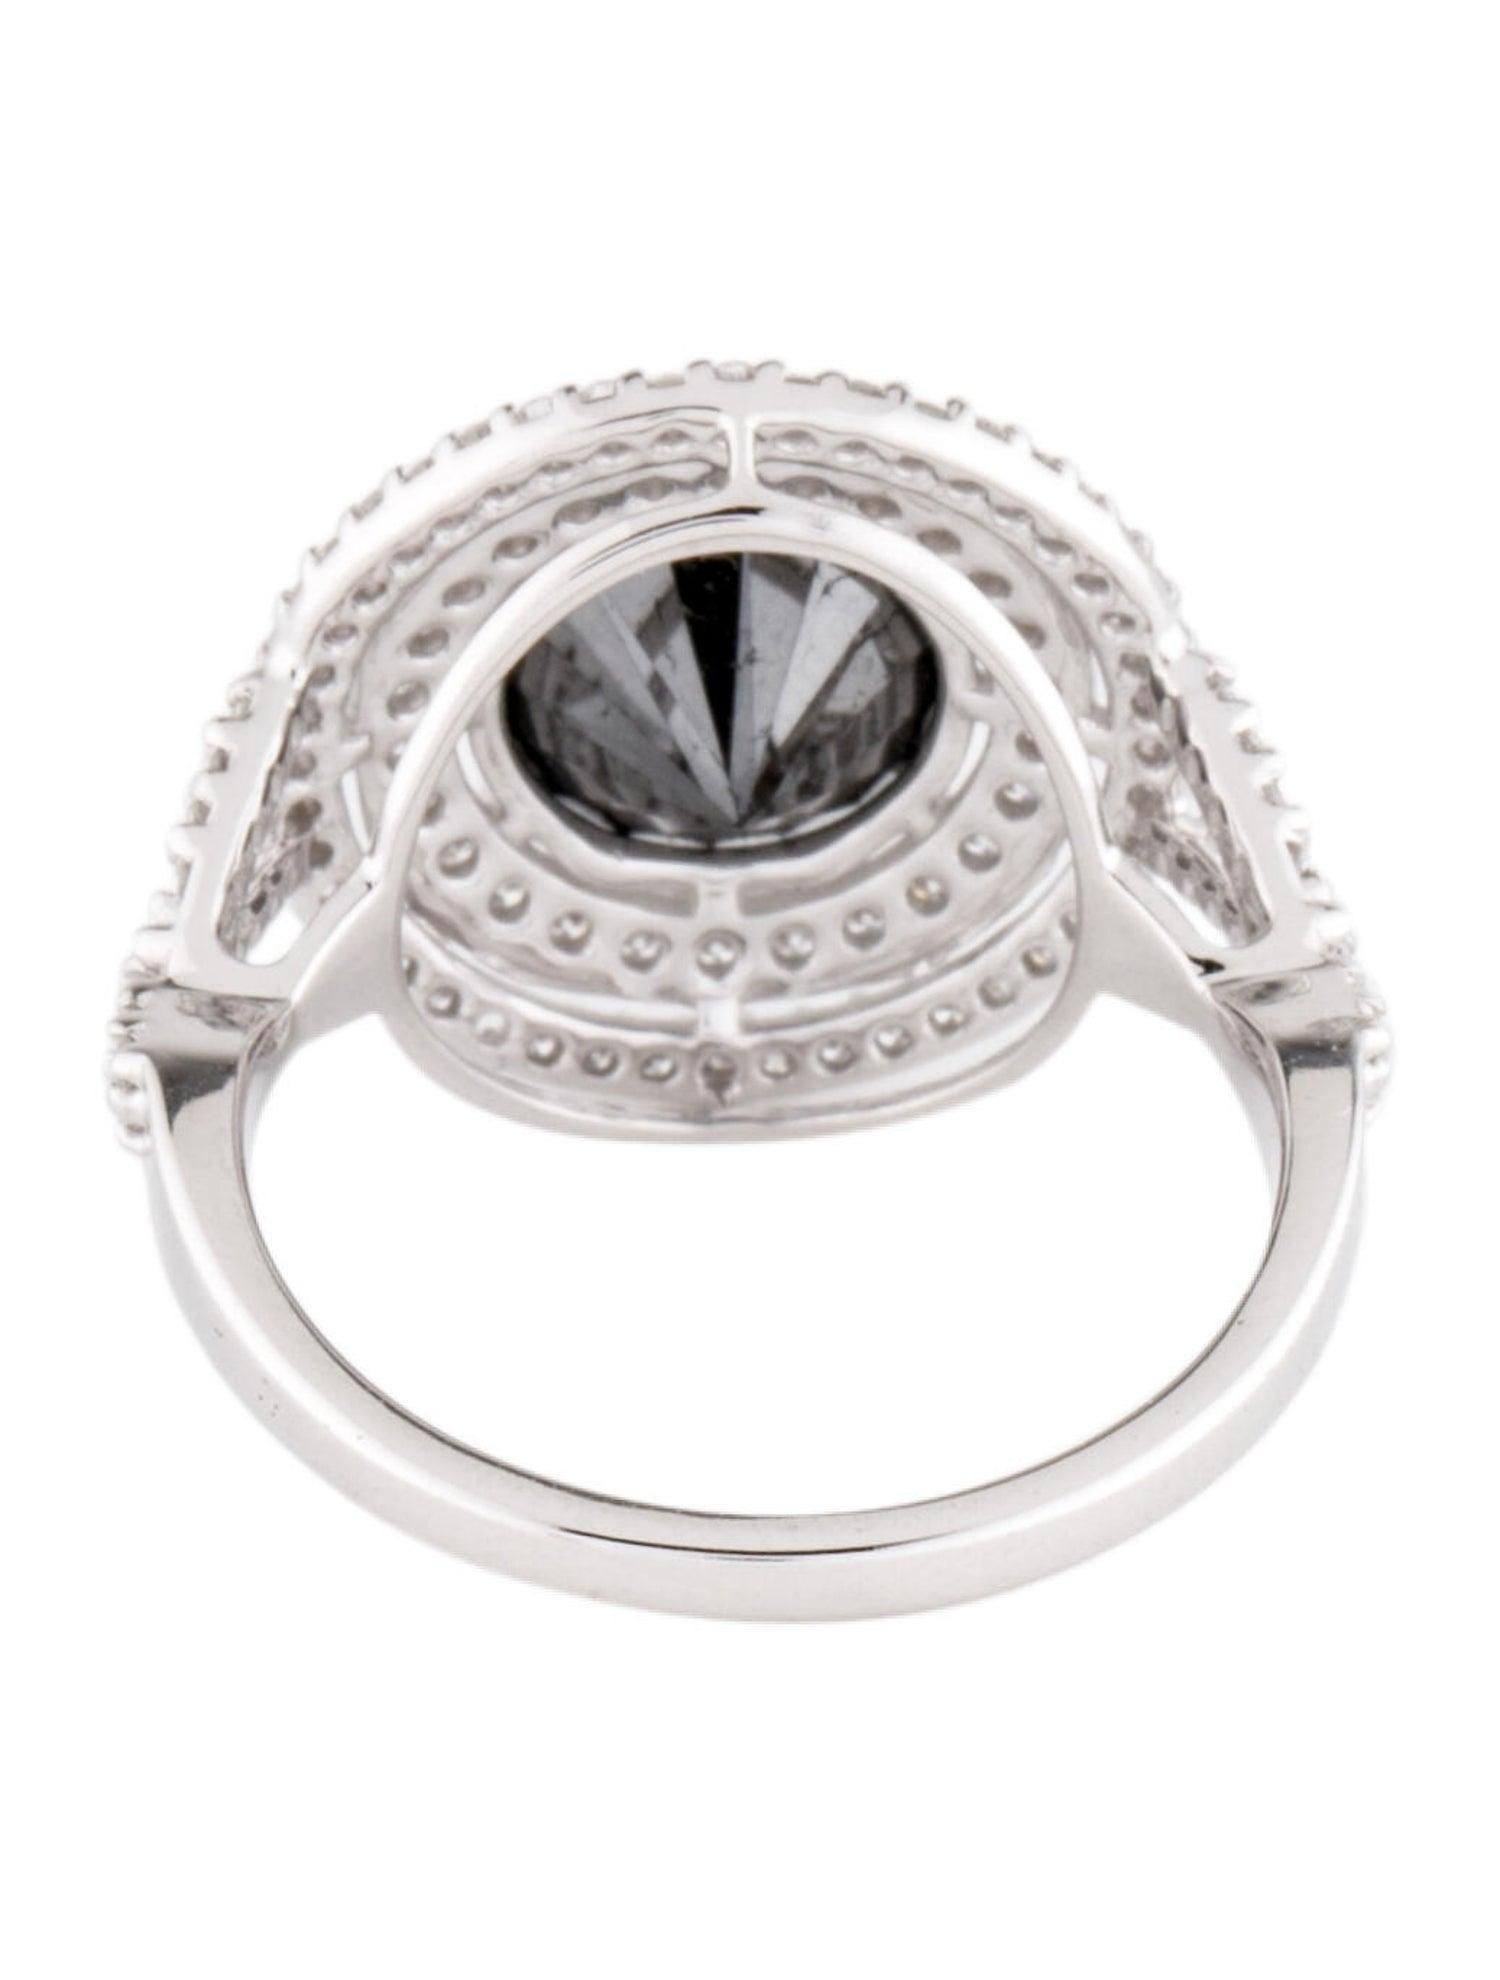 Brilliant Cut Elegant 3.67ct Diamond Engagement Ring, Size 7 - Stunning Statement Jewelry For Sale